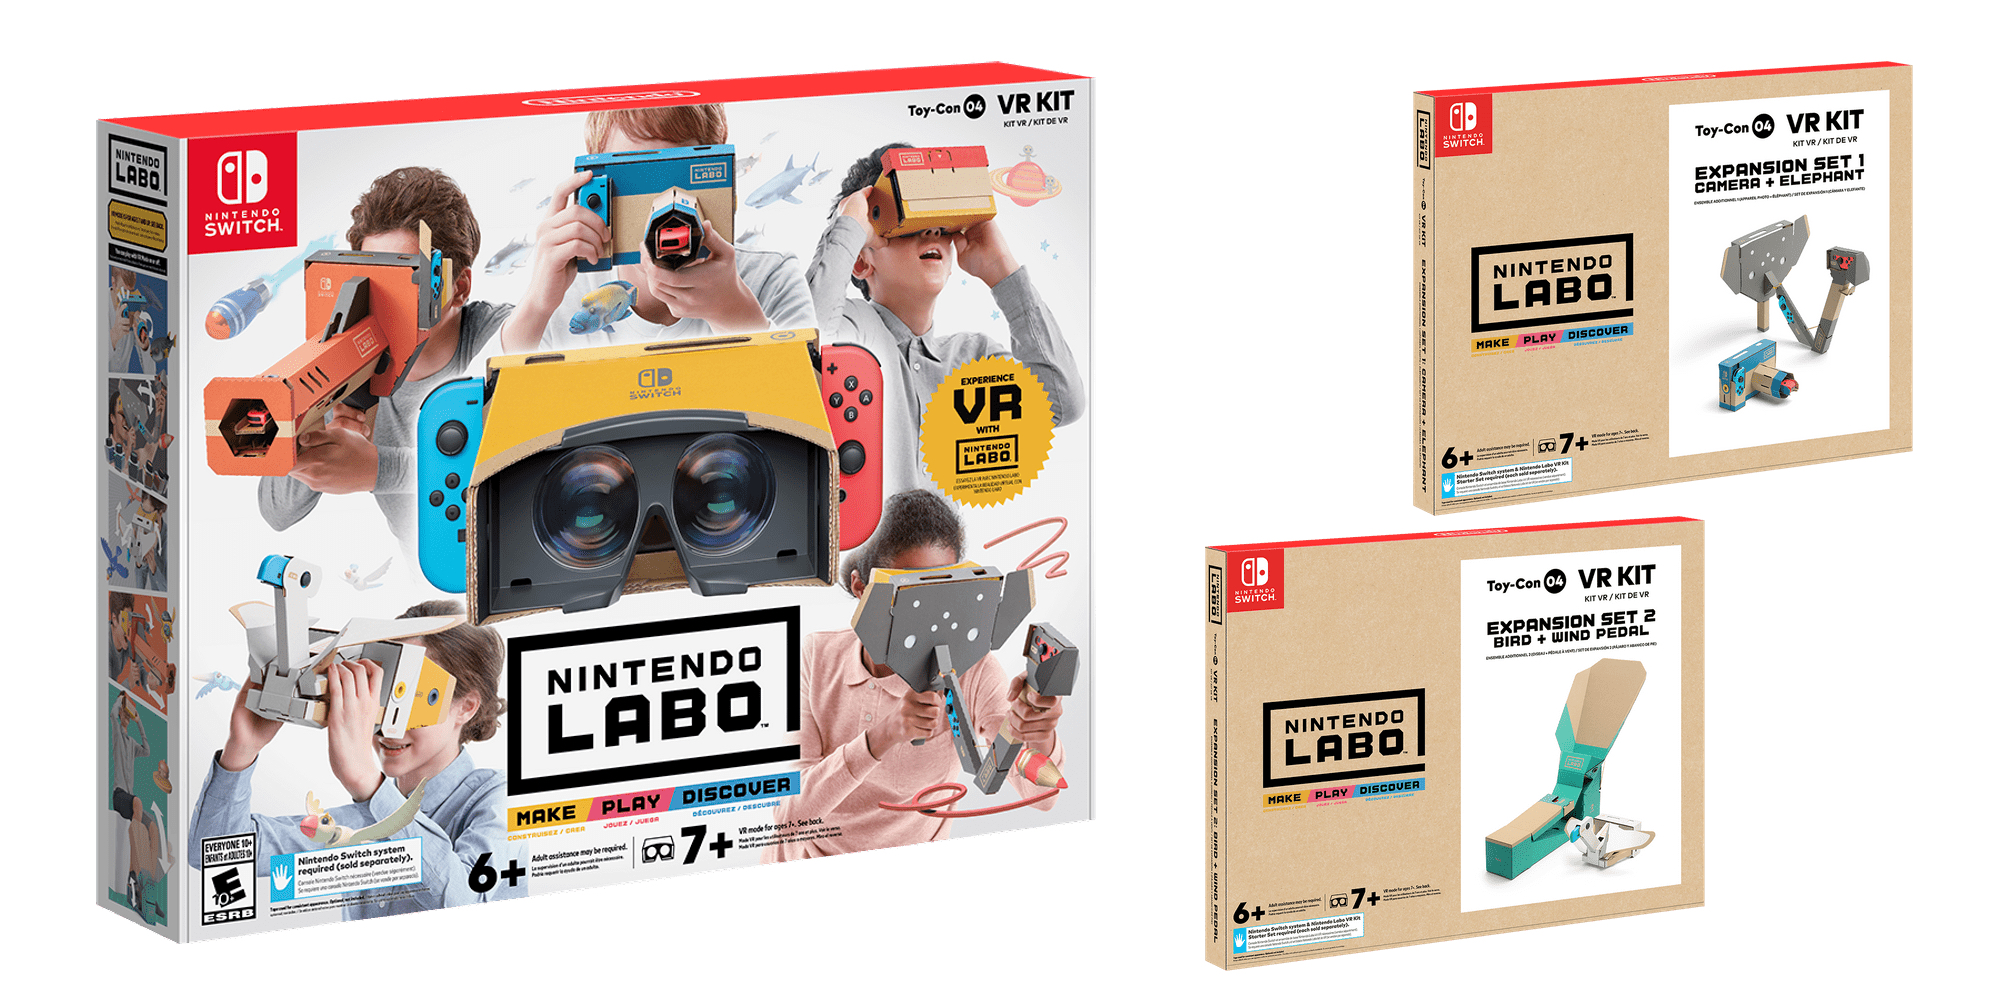 Nintendo Labo VR Kit box art